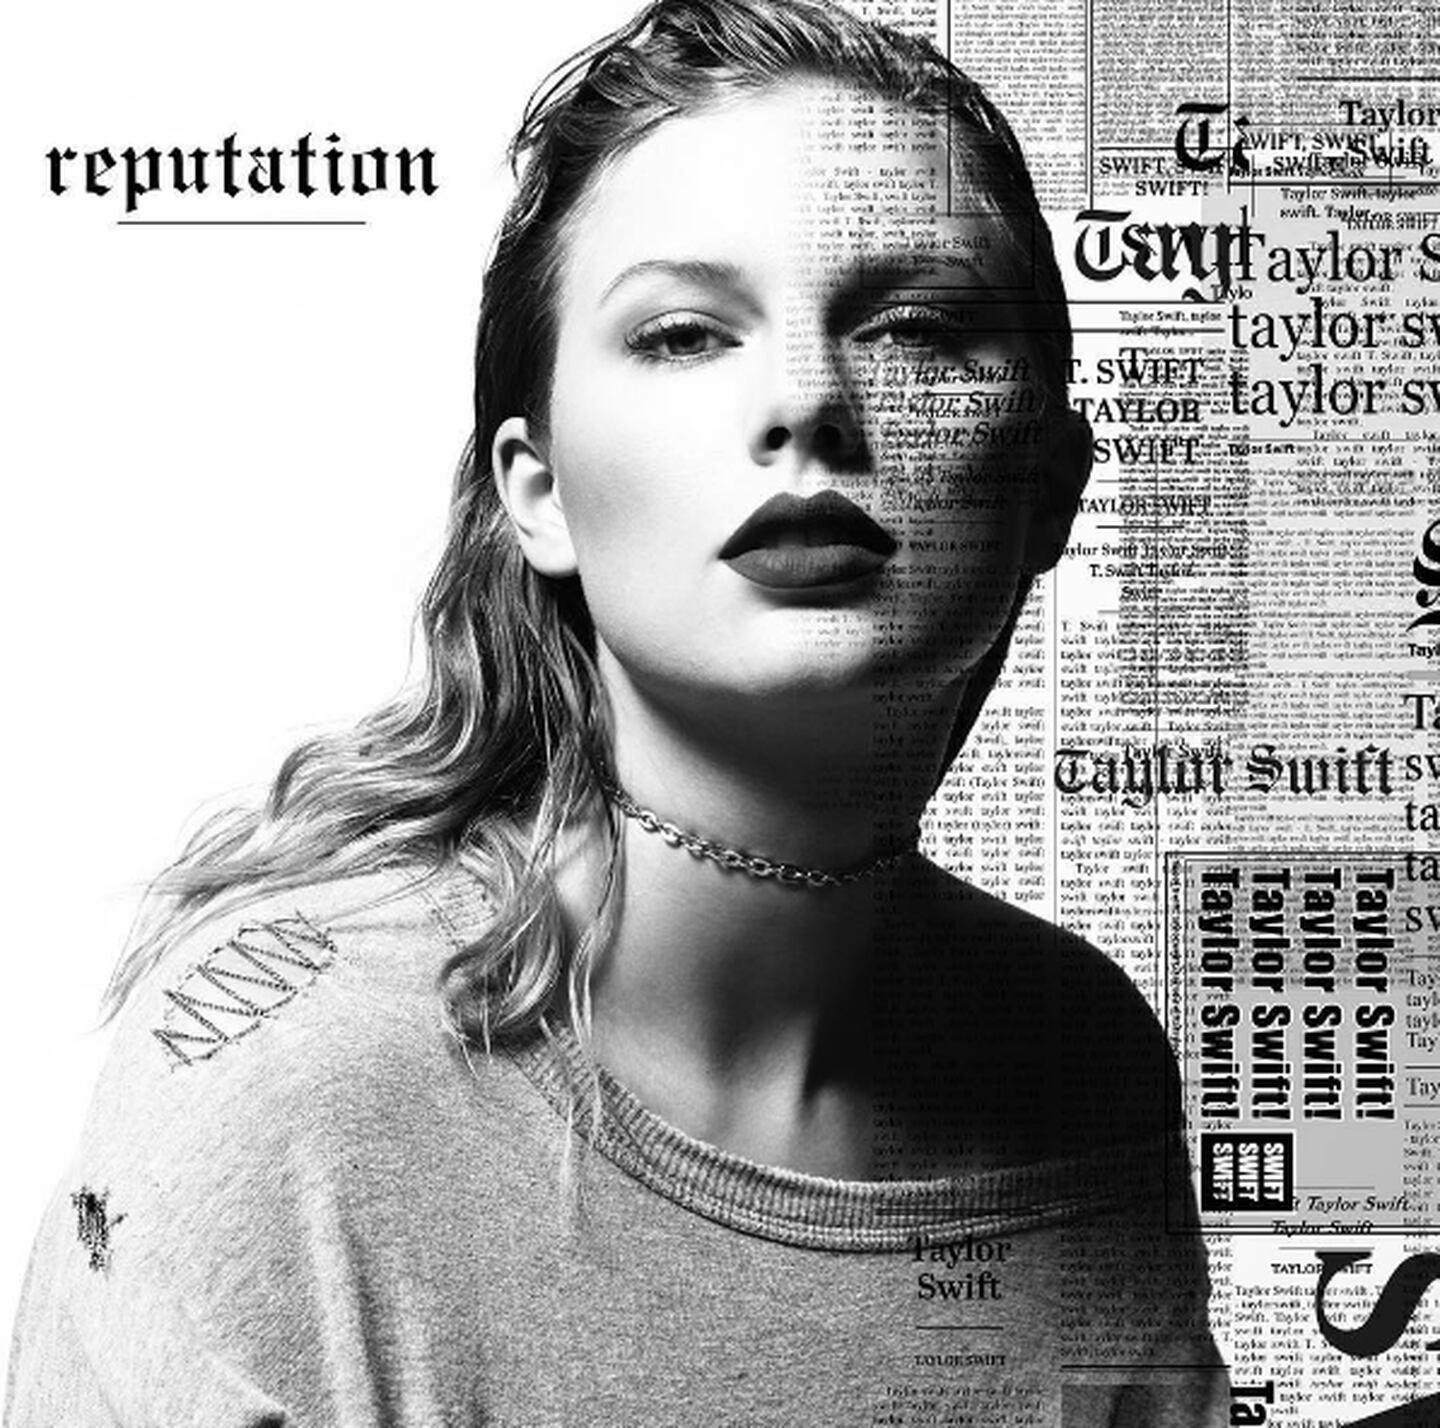 Carátula de "Reputation" de Taylor Swift.